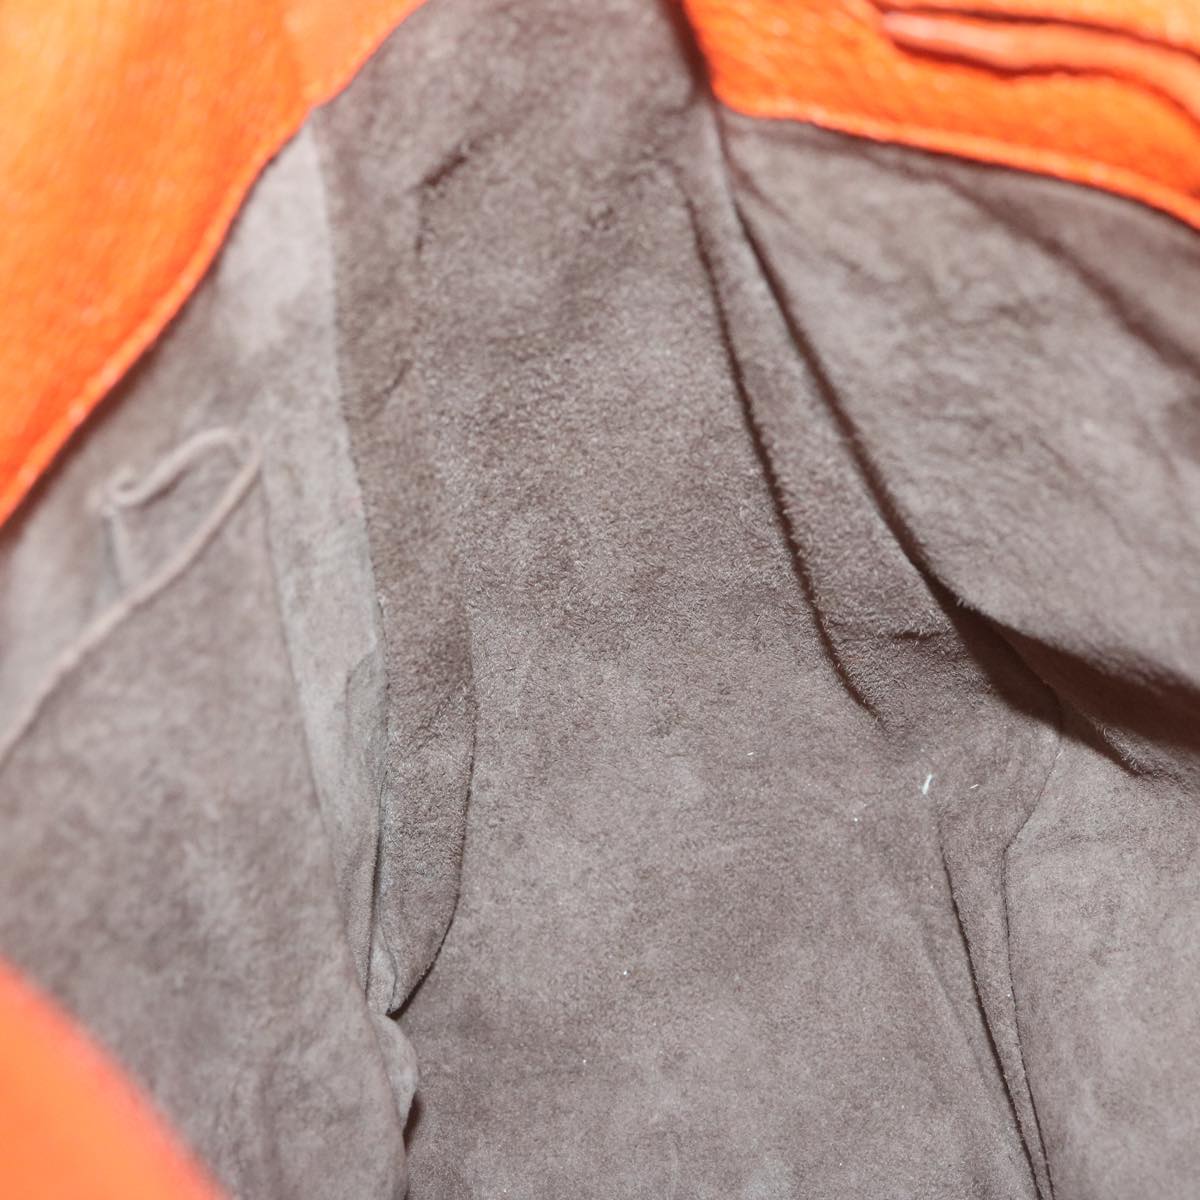 BOTTEGAVENETA INTRECCIATO Shoulder Bag Leather Orange Auth yk10407